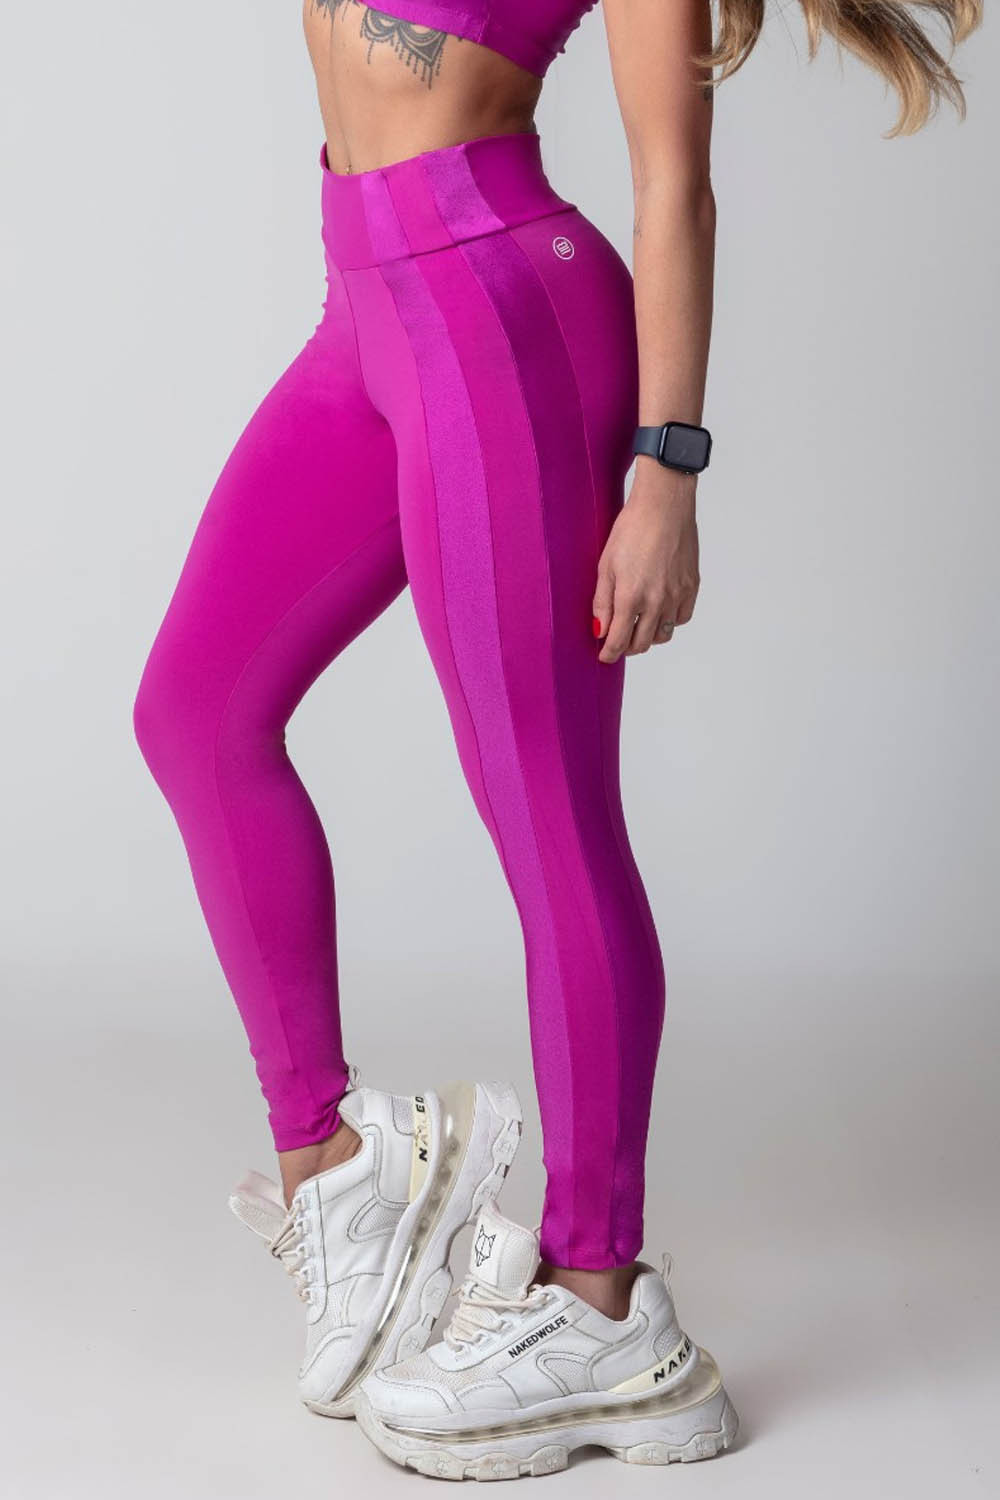 Grape Purple Blogger Fitness leggings with Cutouts